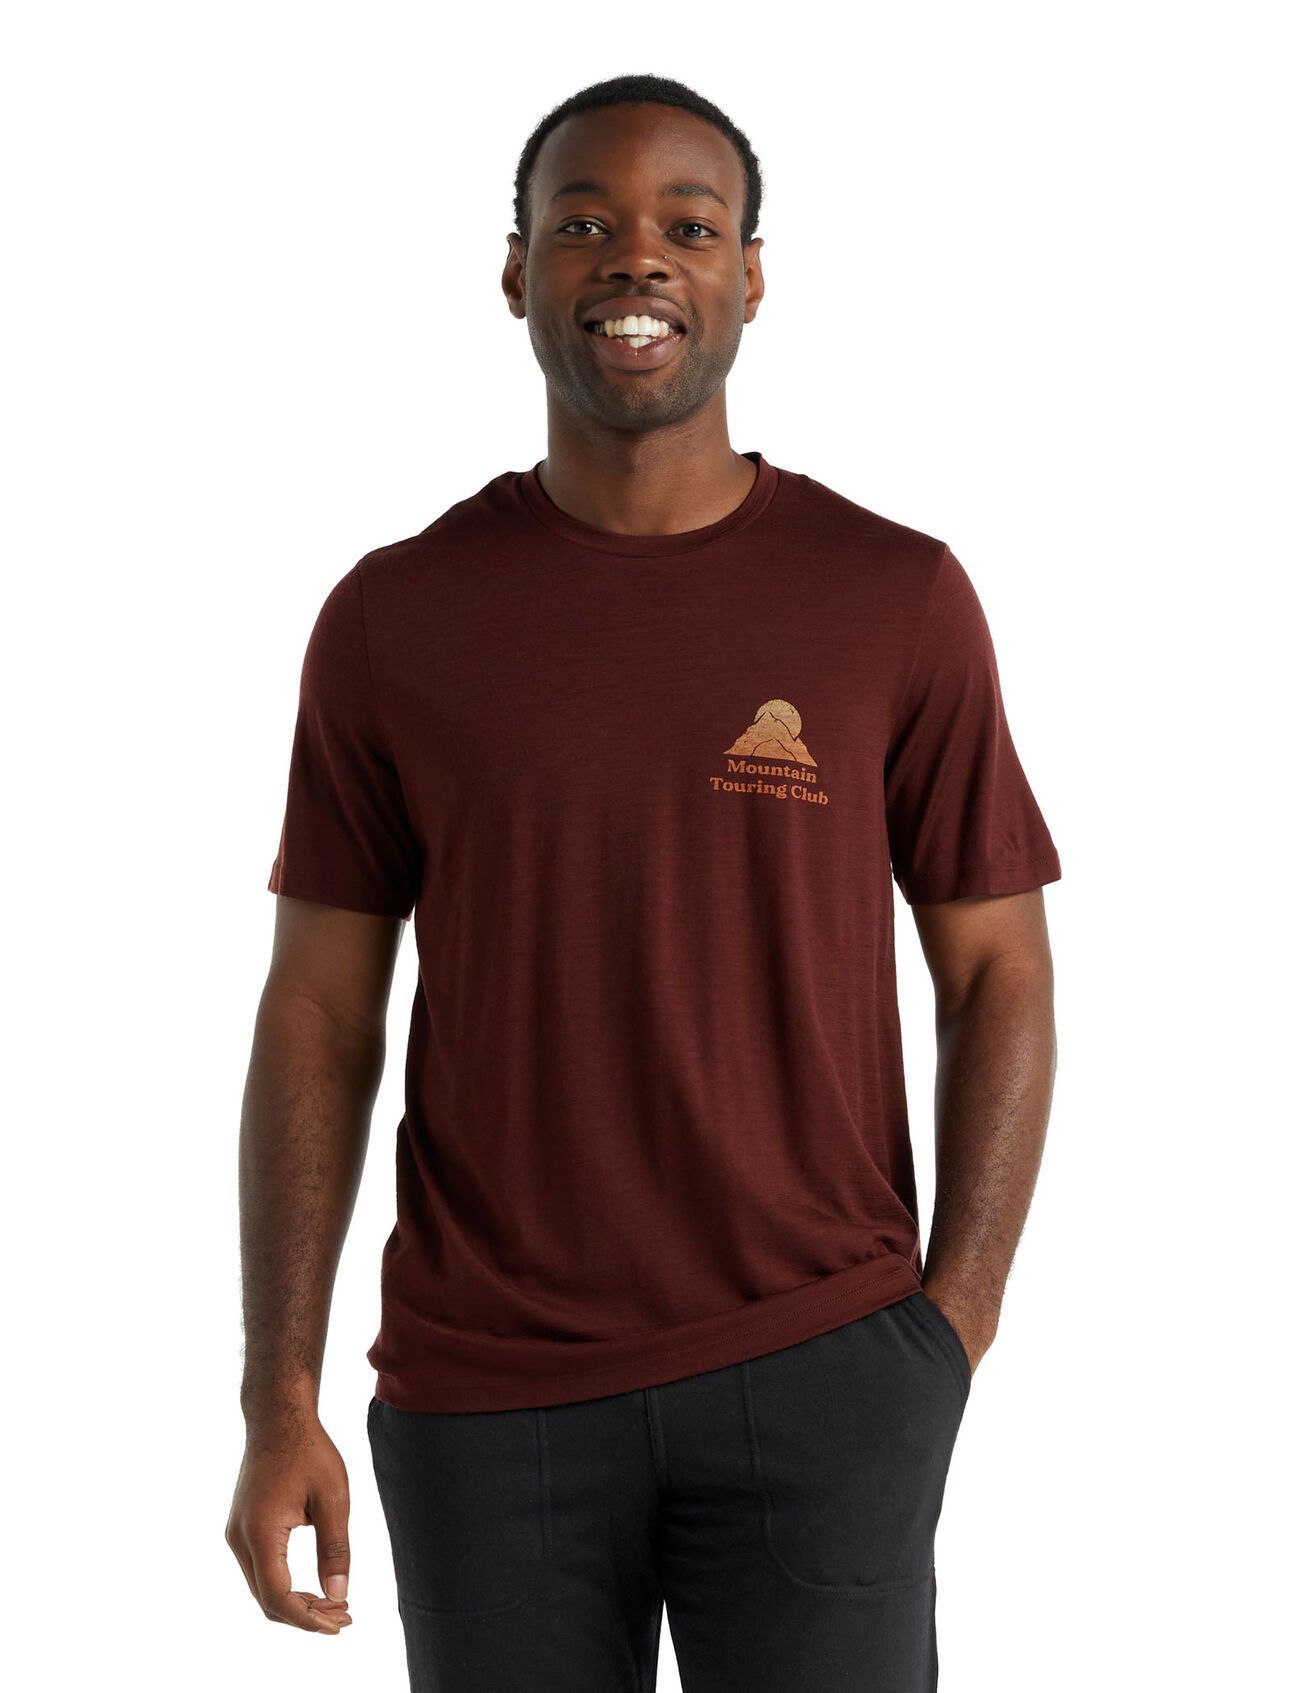 T-shirt manches courtes mérinos Tech Lite II Mountain Touring Club